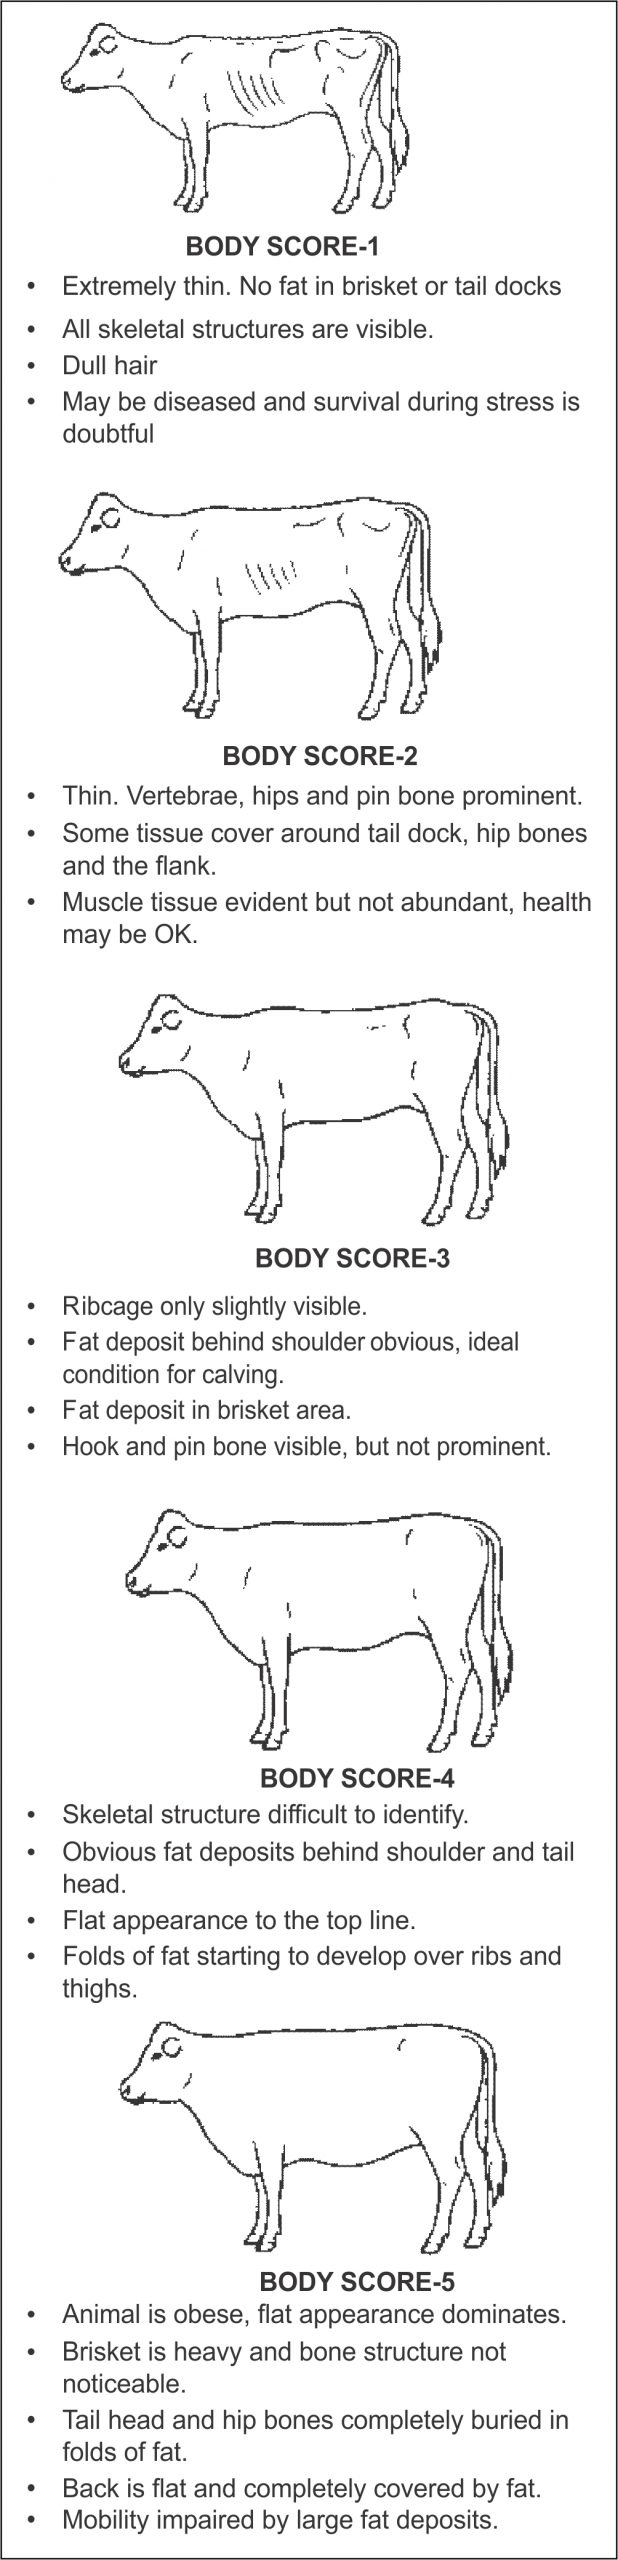 Body score graphic